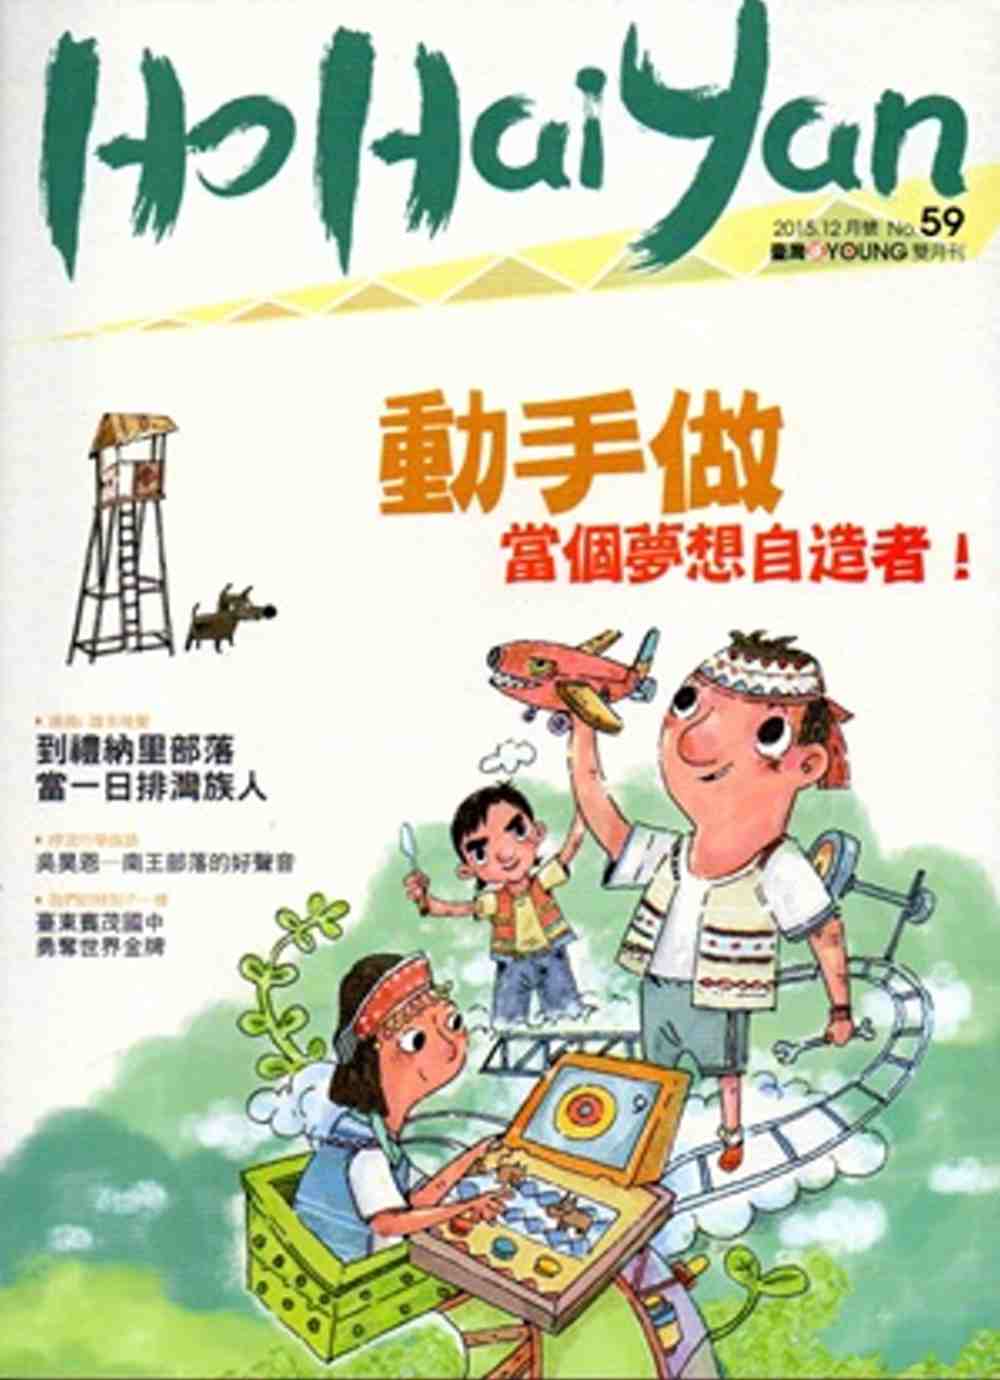 Ho Hai Yan台灣原YOUNG原住民青少年雜誌雙月刊2015.12 NO.59